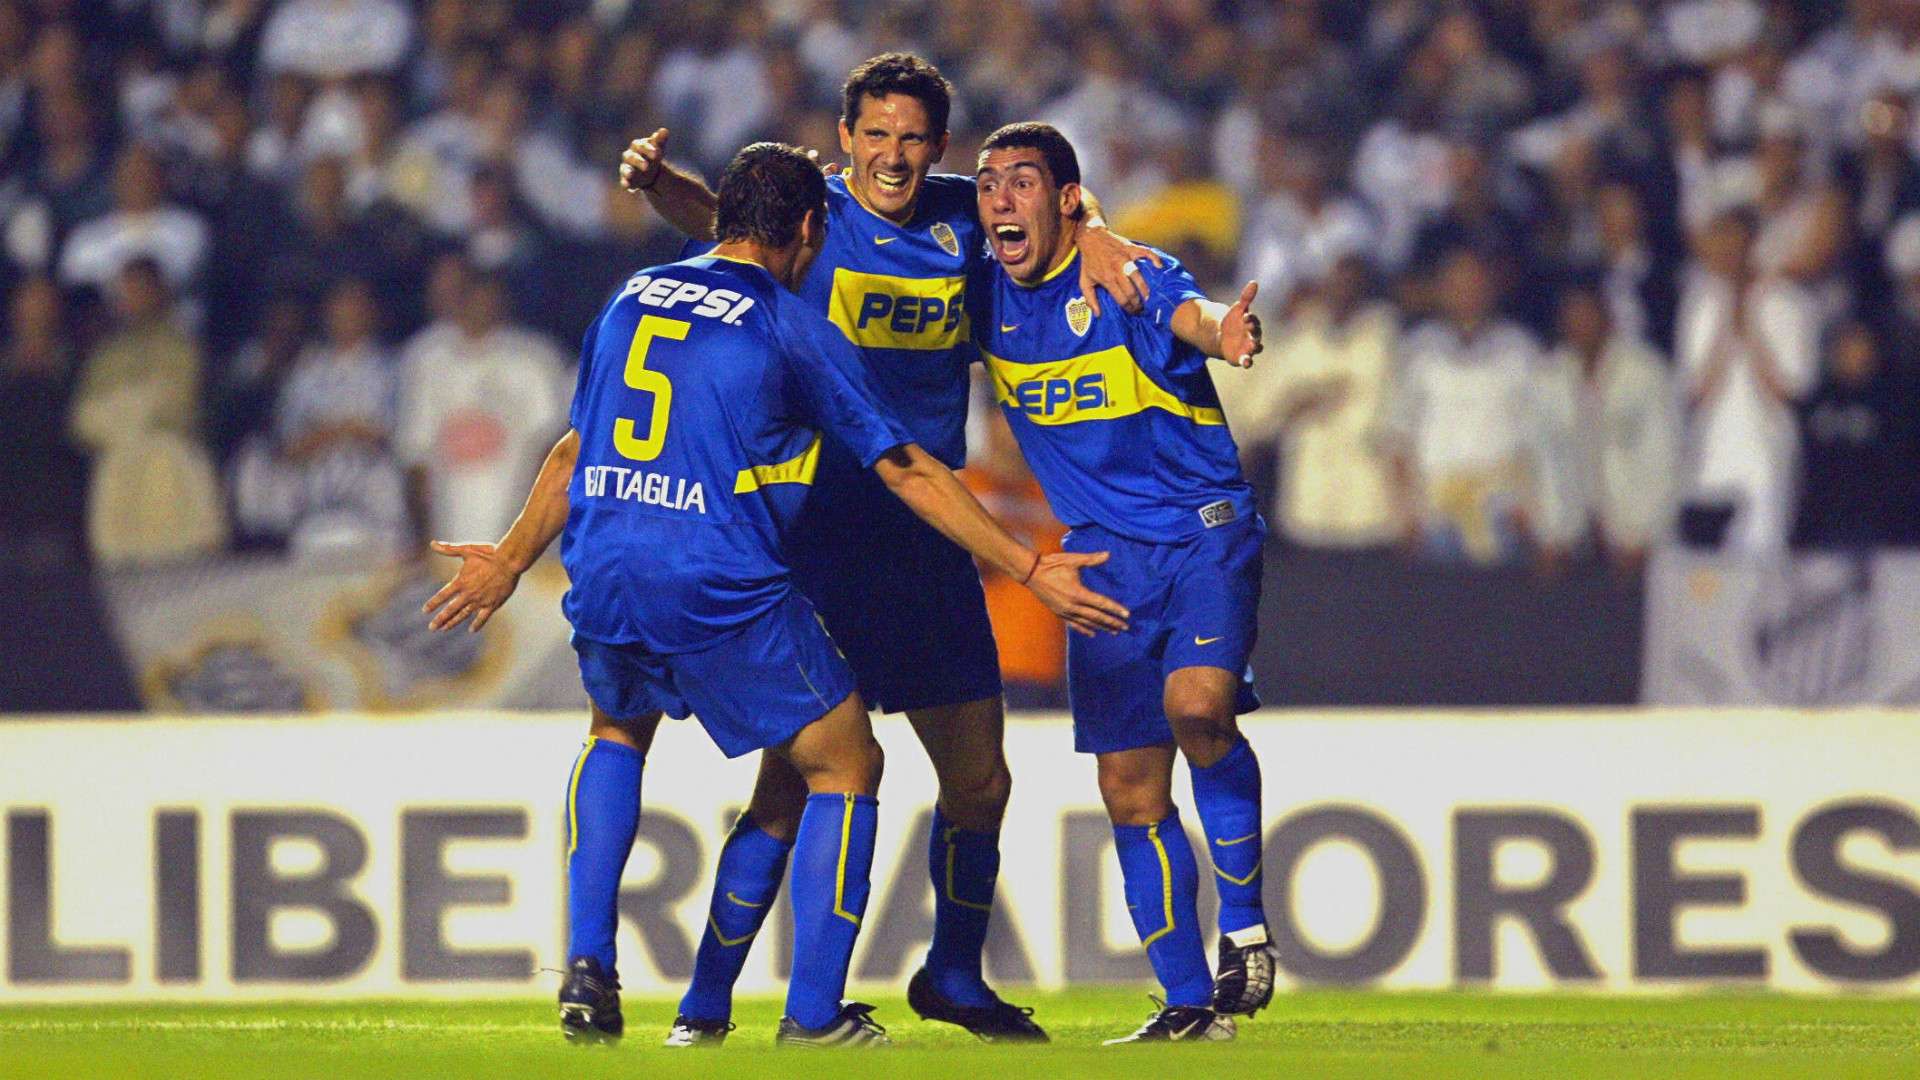 Carlos Tevez Diego Cagna Sebastian Battaglia Boca Santos Final Copa Libertadores 2003